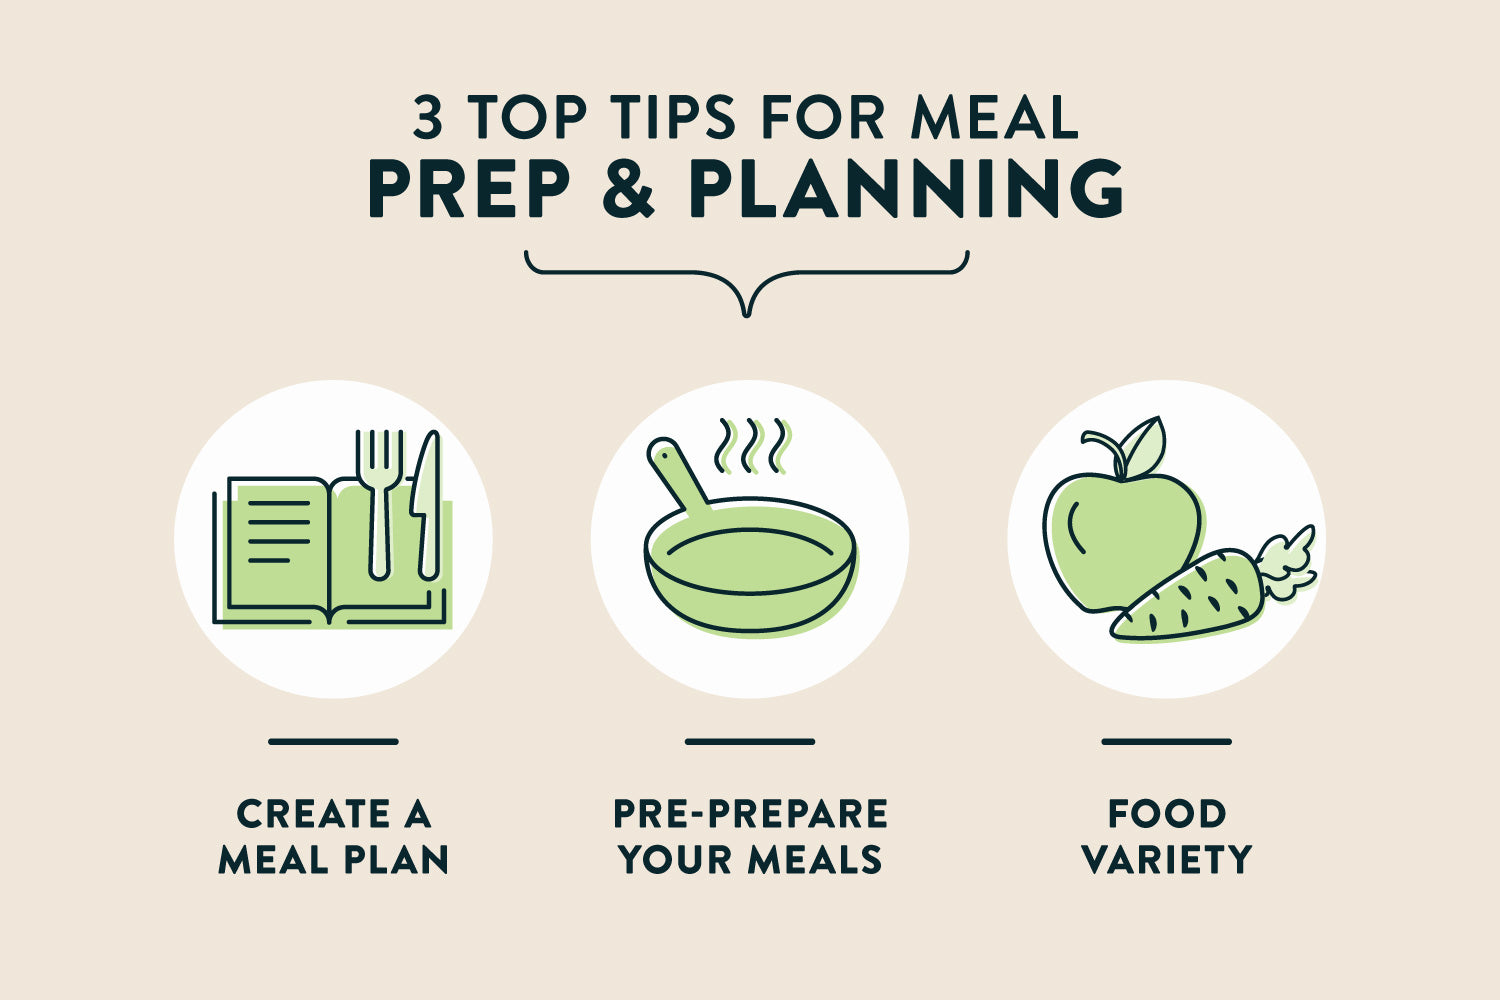 Preparing for excellence: Proper food prep requires proper tools